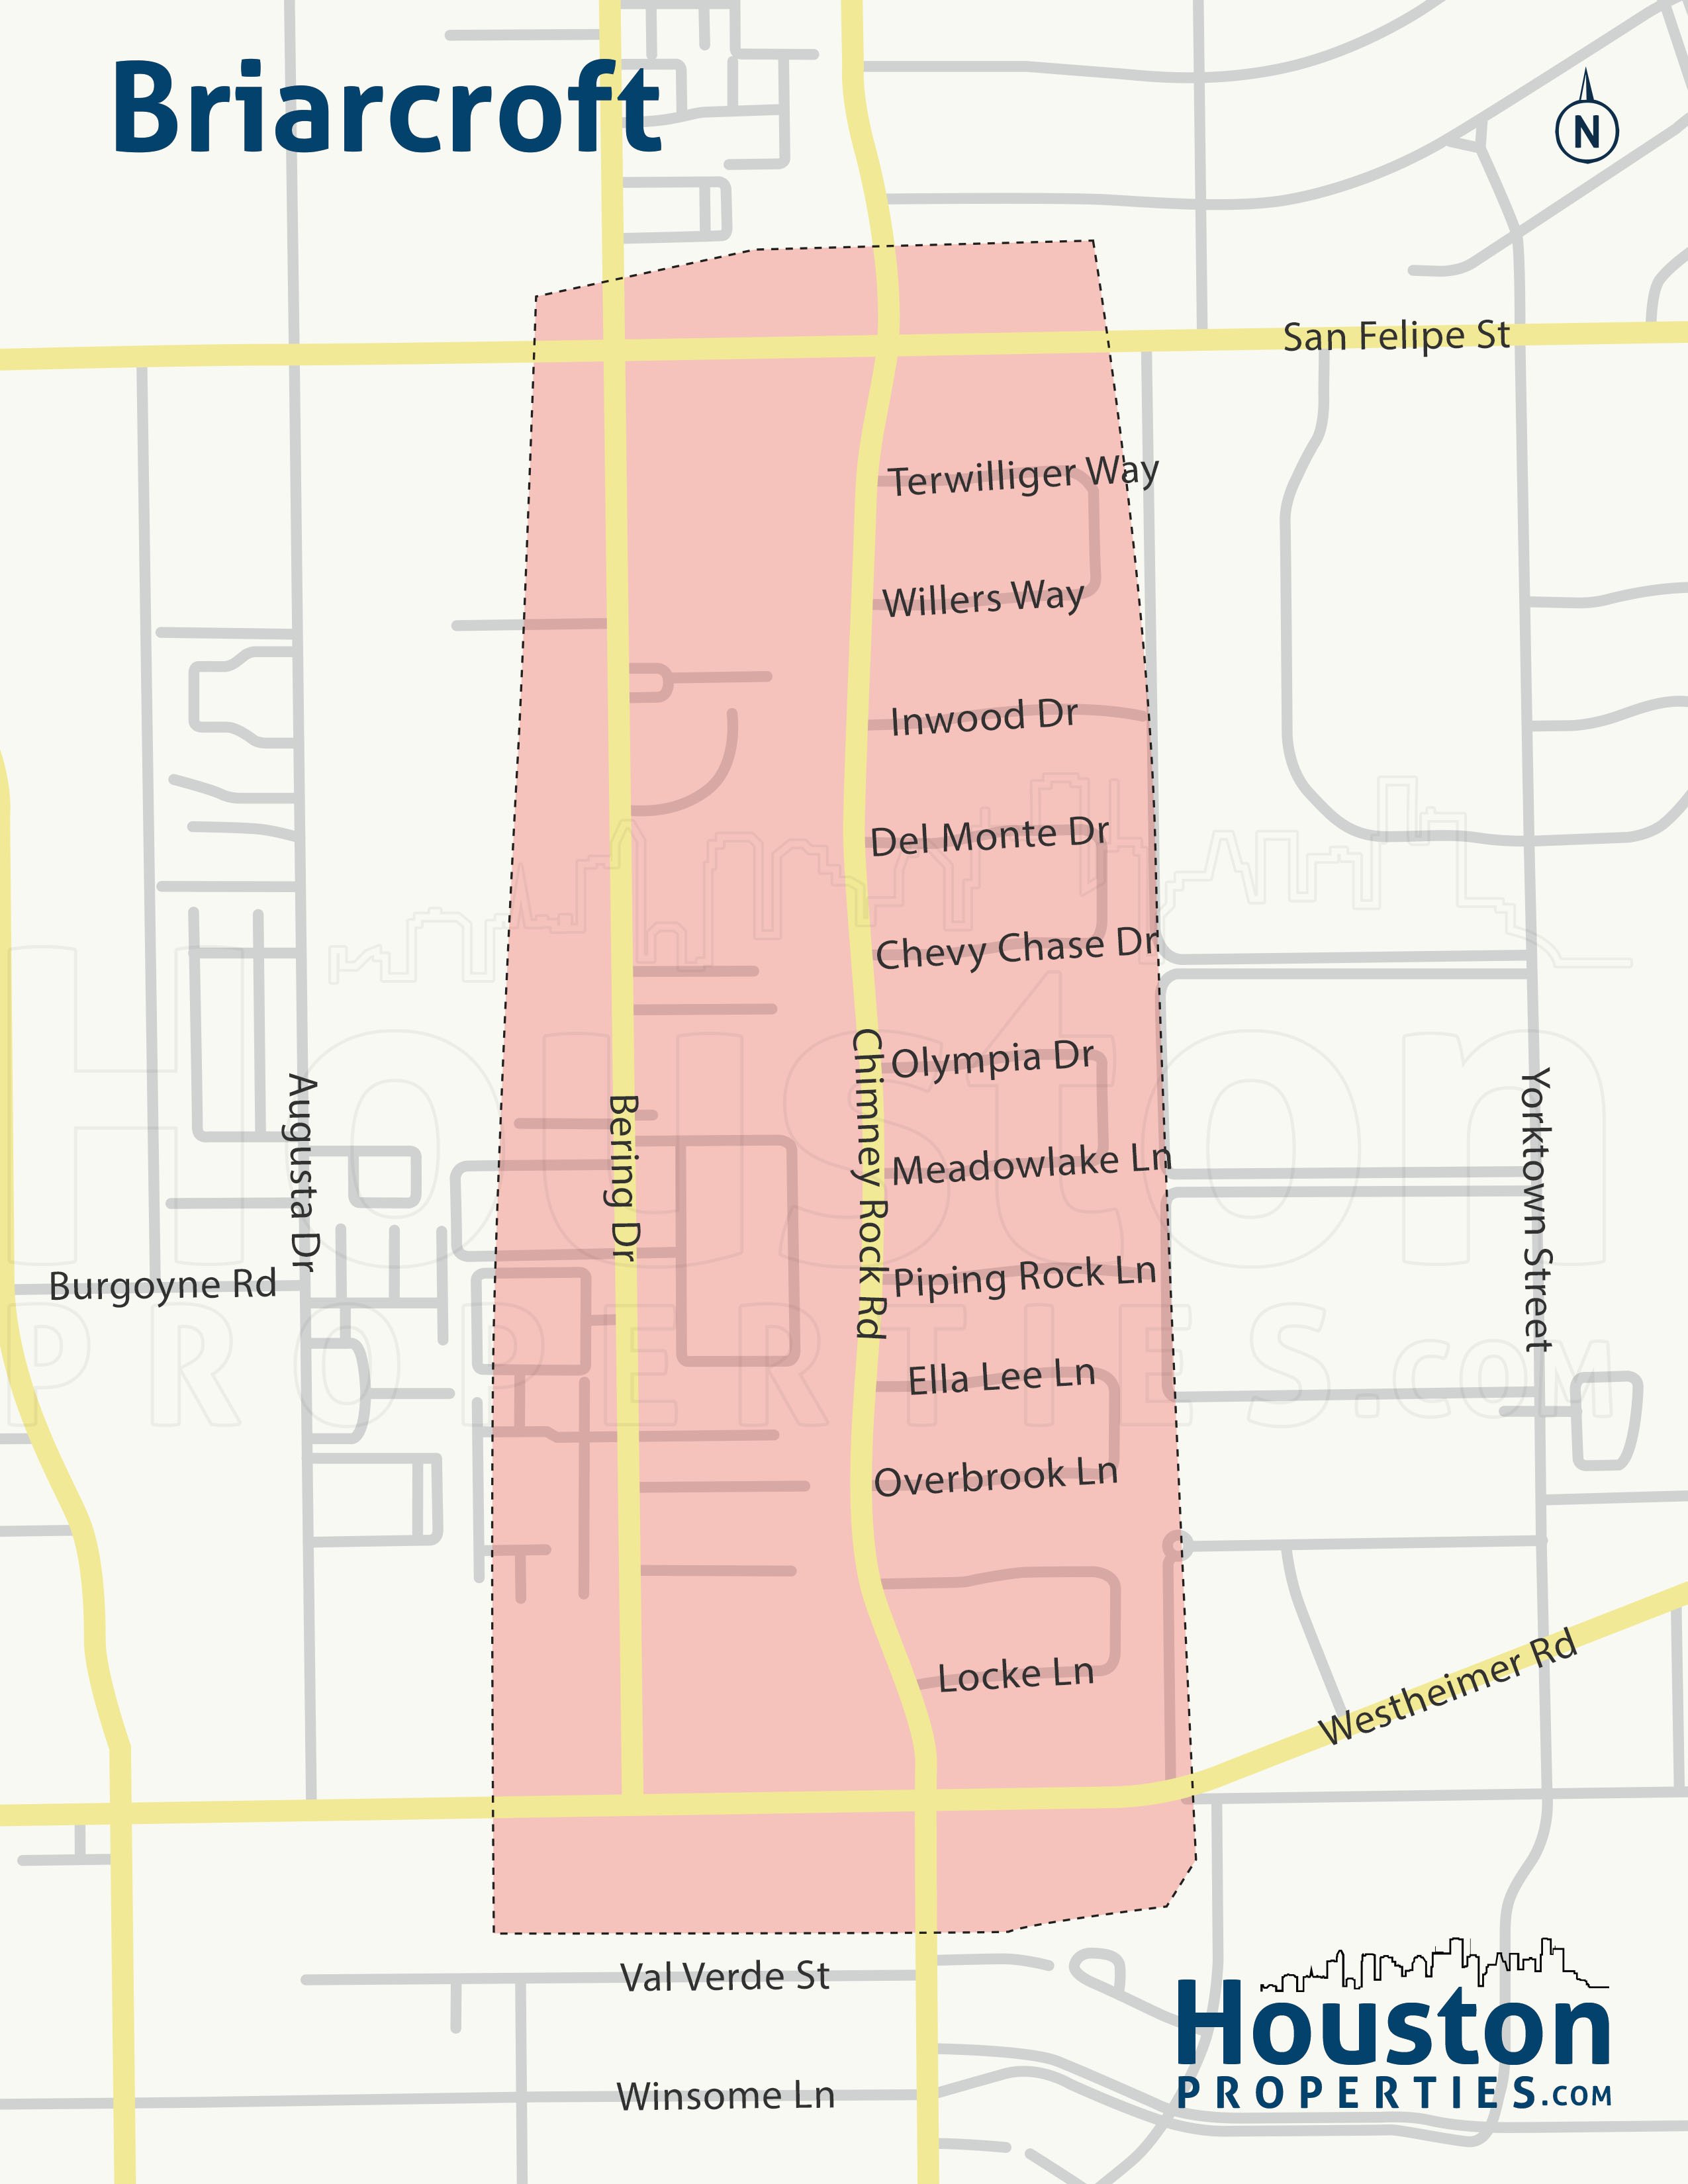 Briarcroft neighborhood map